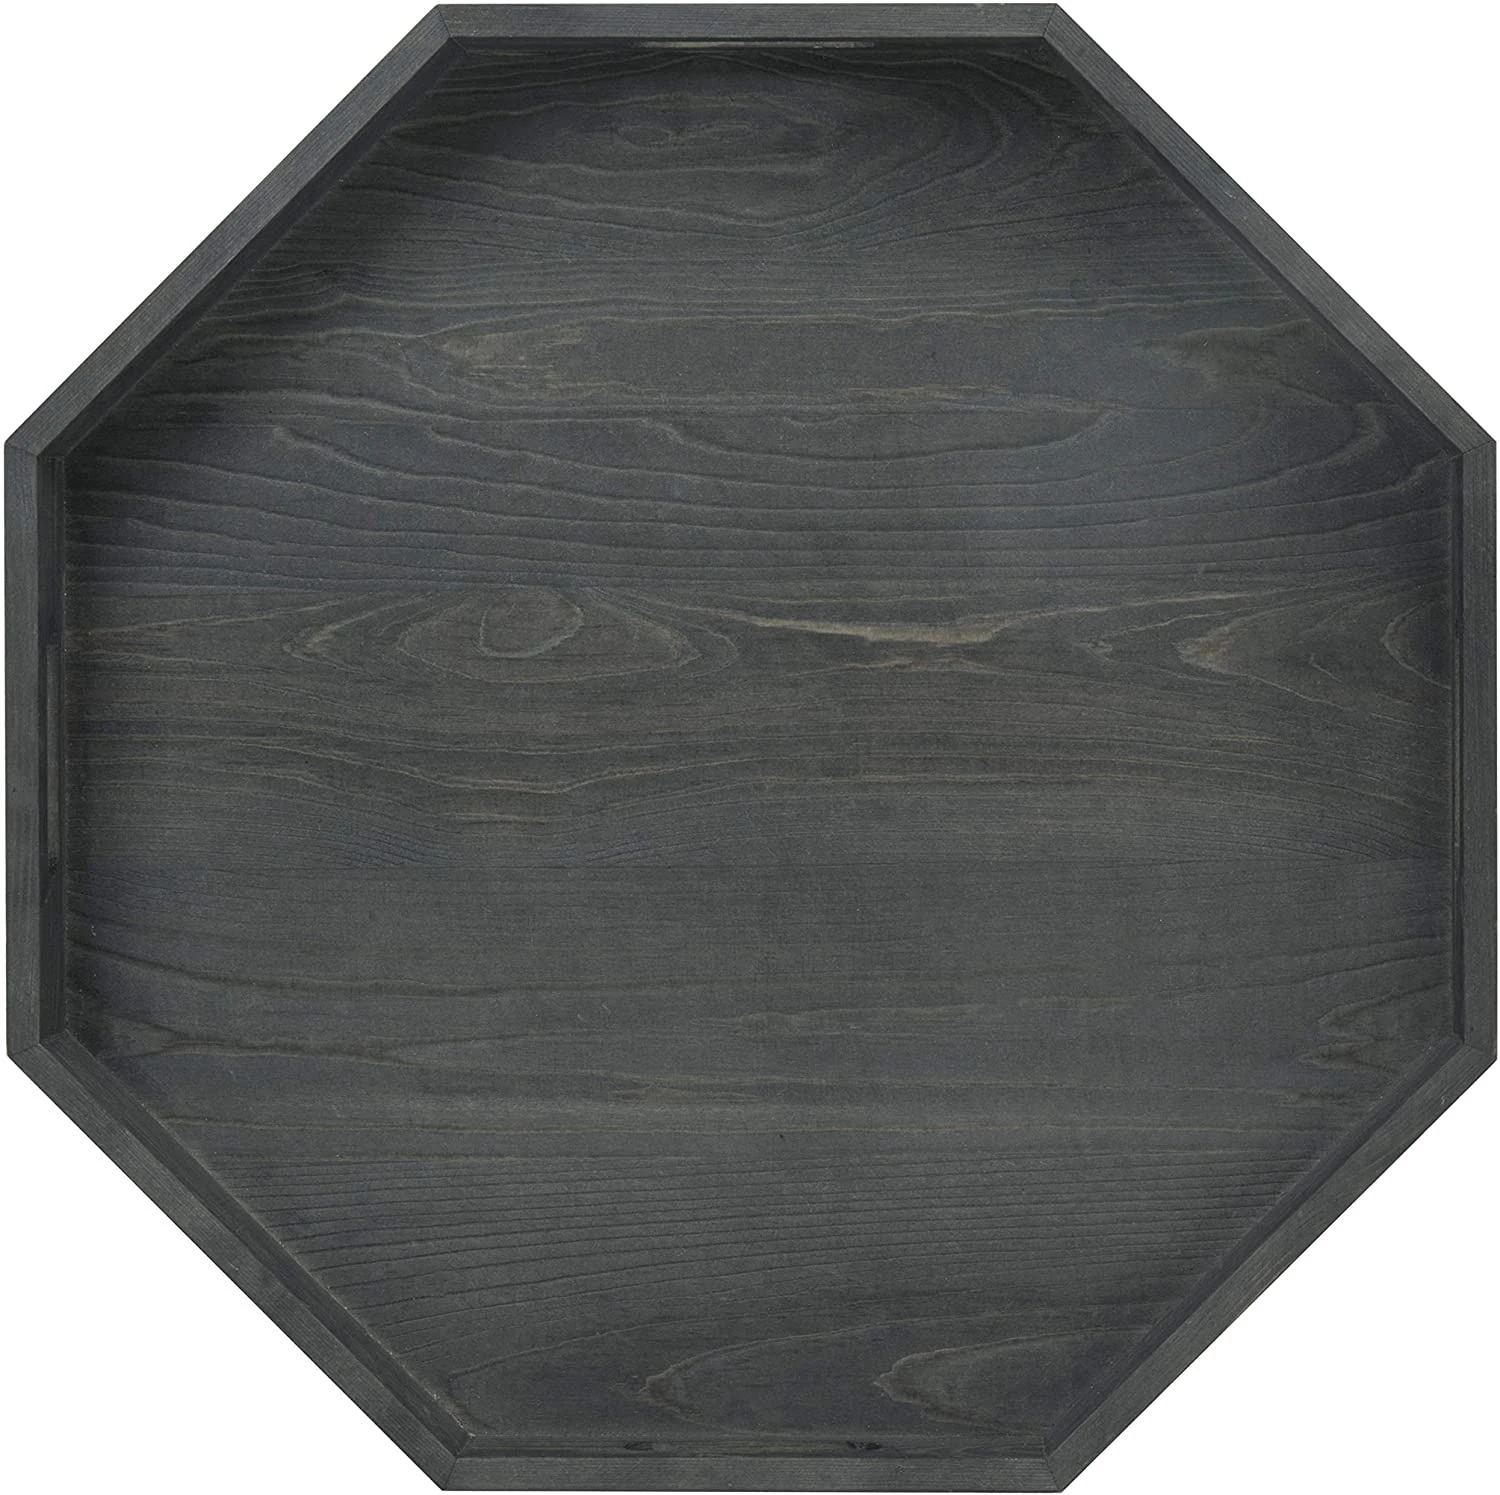 High quality Rustic vintage Octagonal Polygon Grey Wood Serving Tray